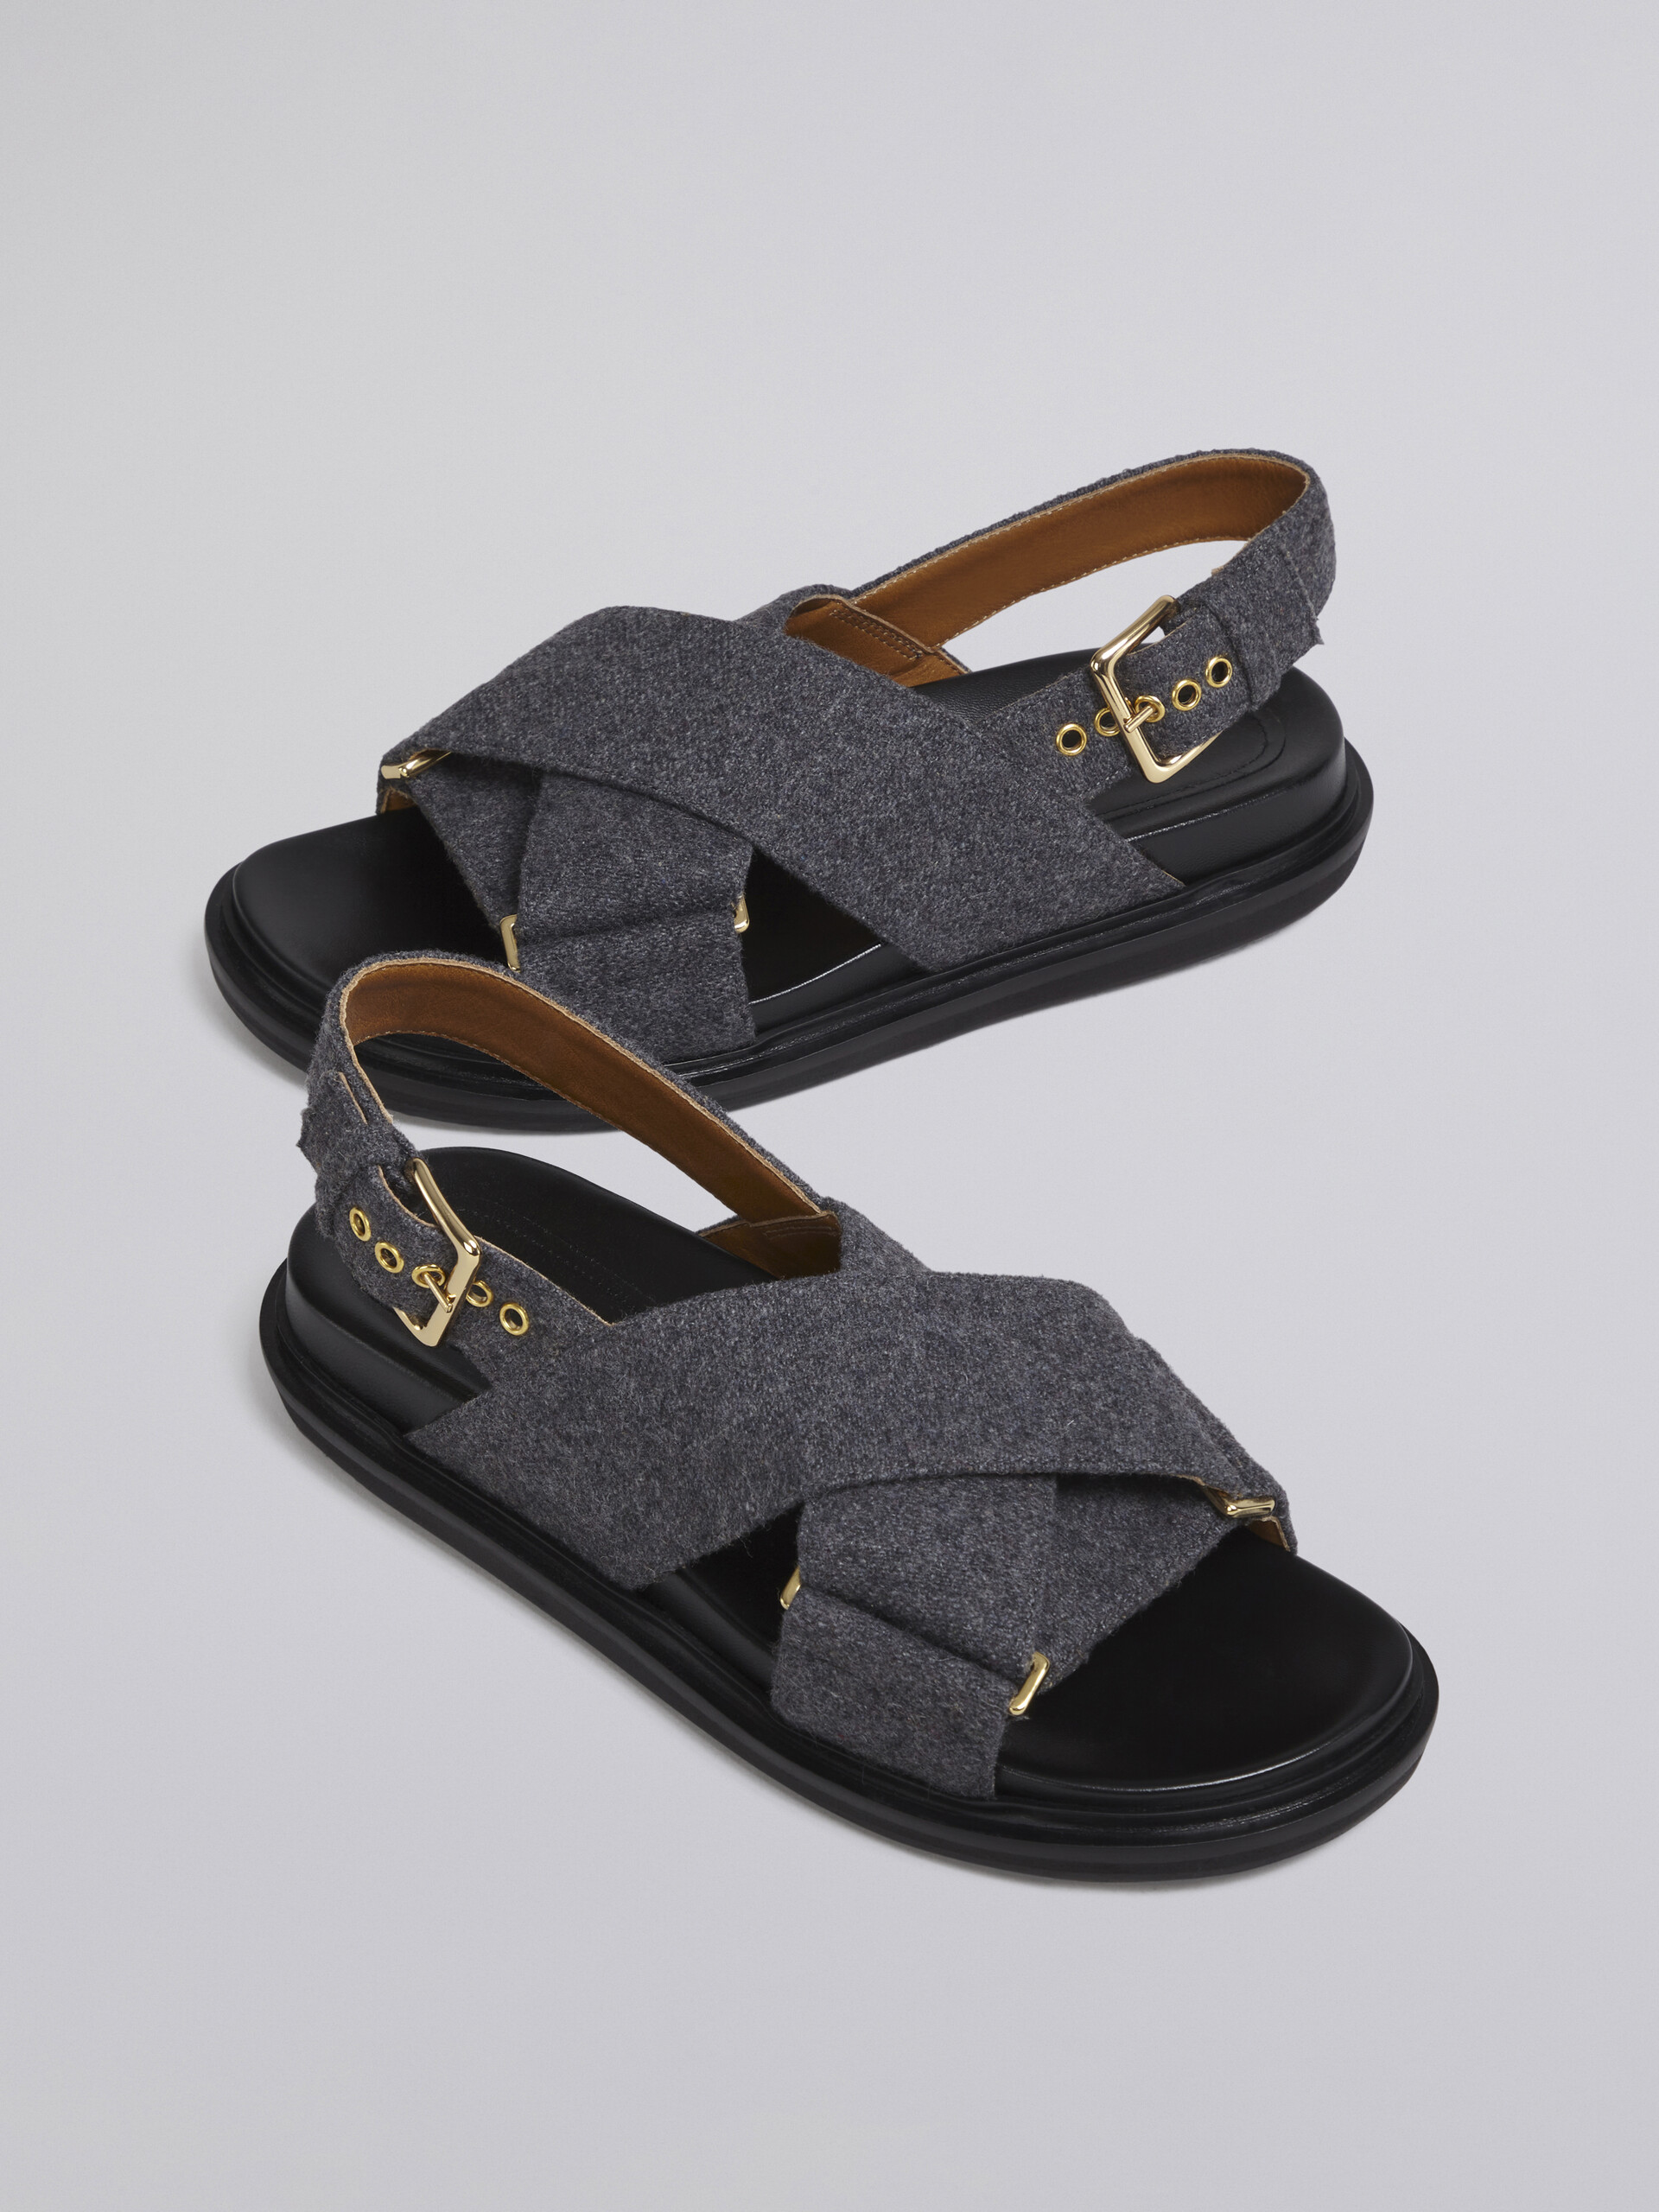 Criss-cross fussbett in grey wool felt - Sandals - Image 5